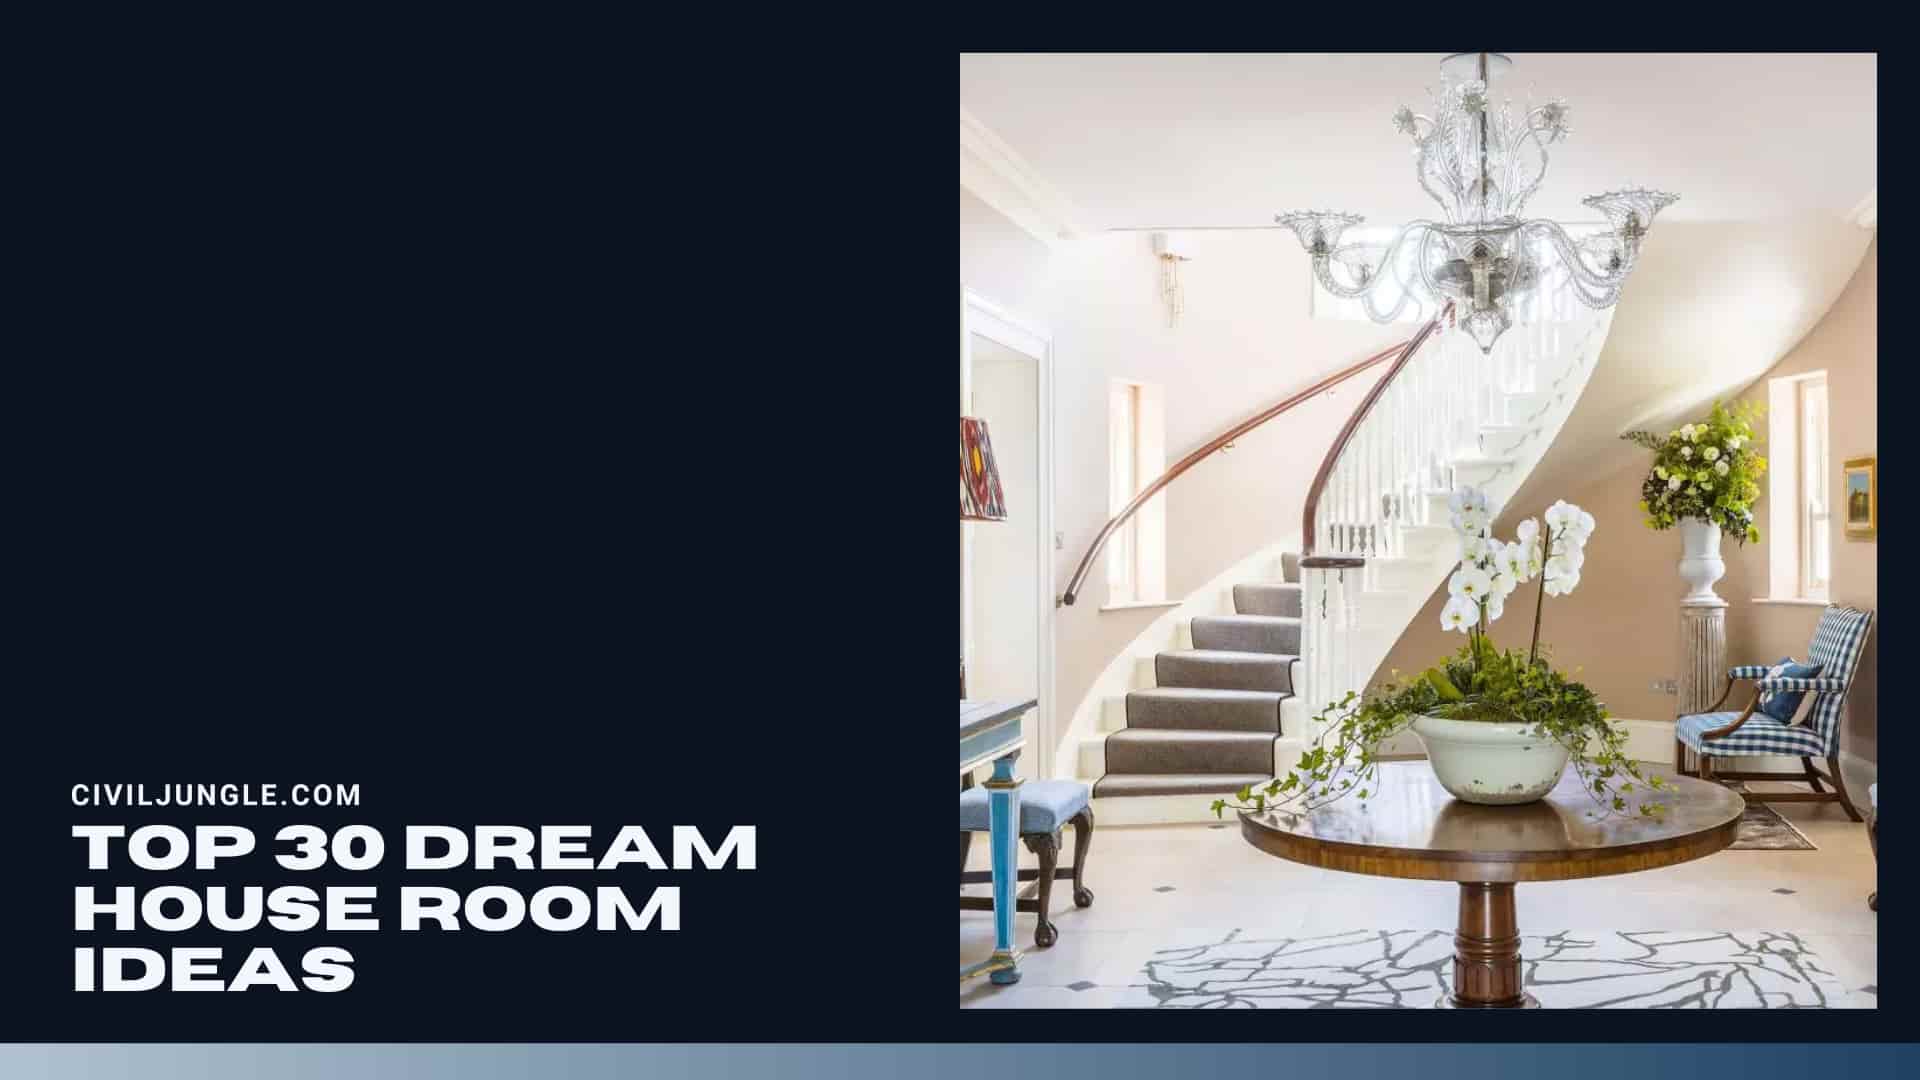 Top 30 Dream House Room Ideas